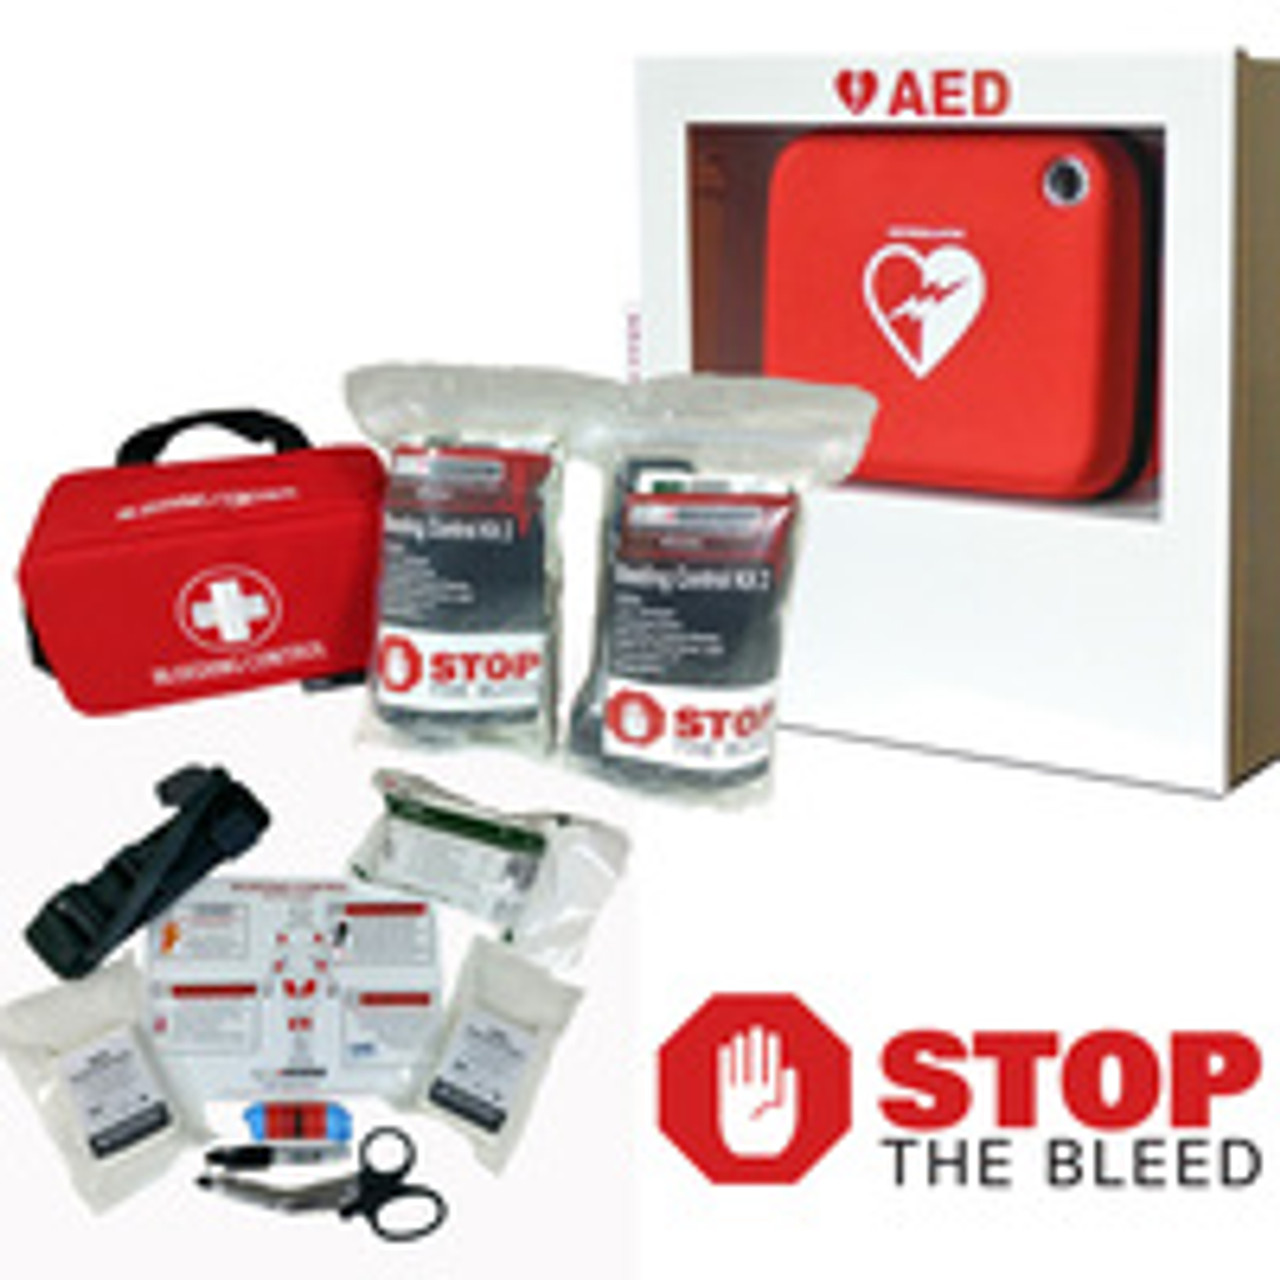 New Public Access Bleeding Control Kit